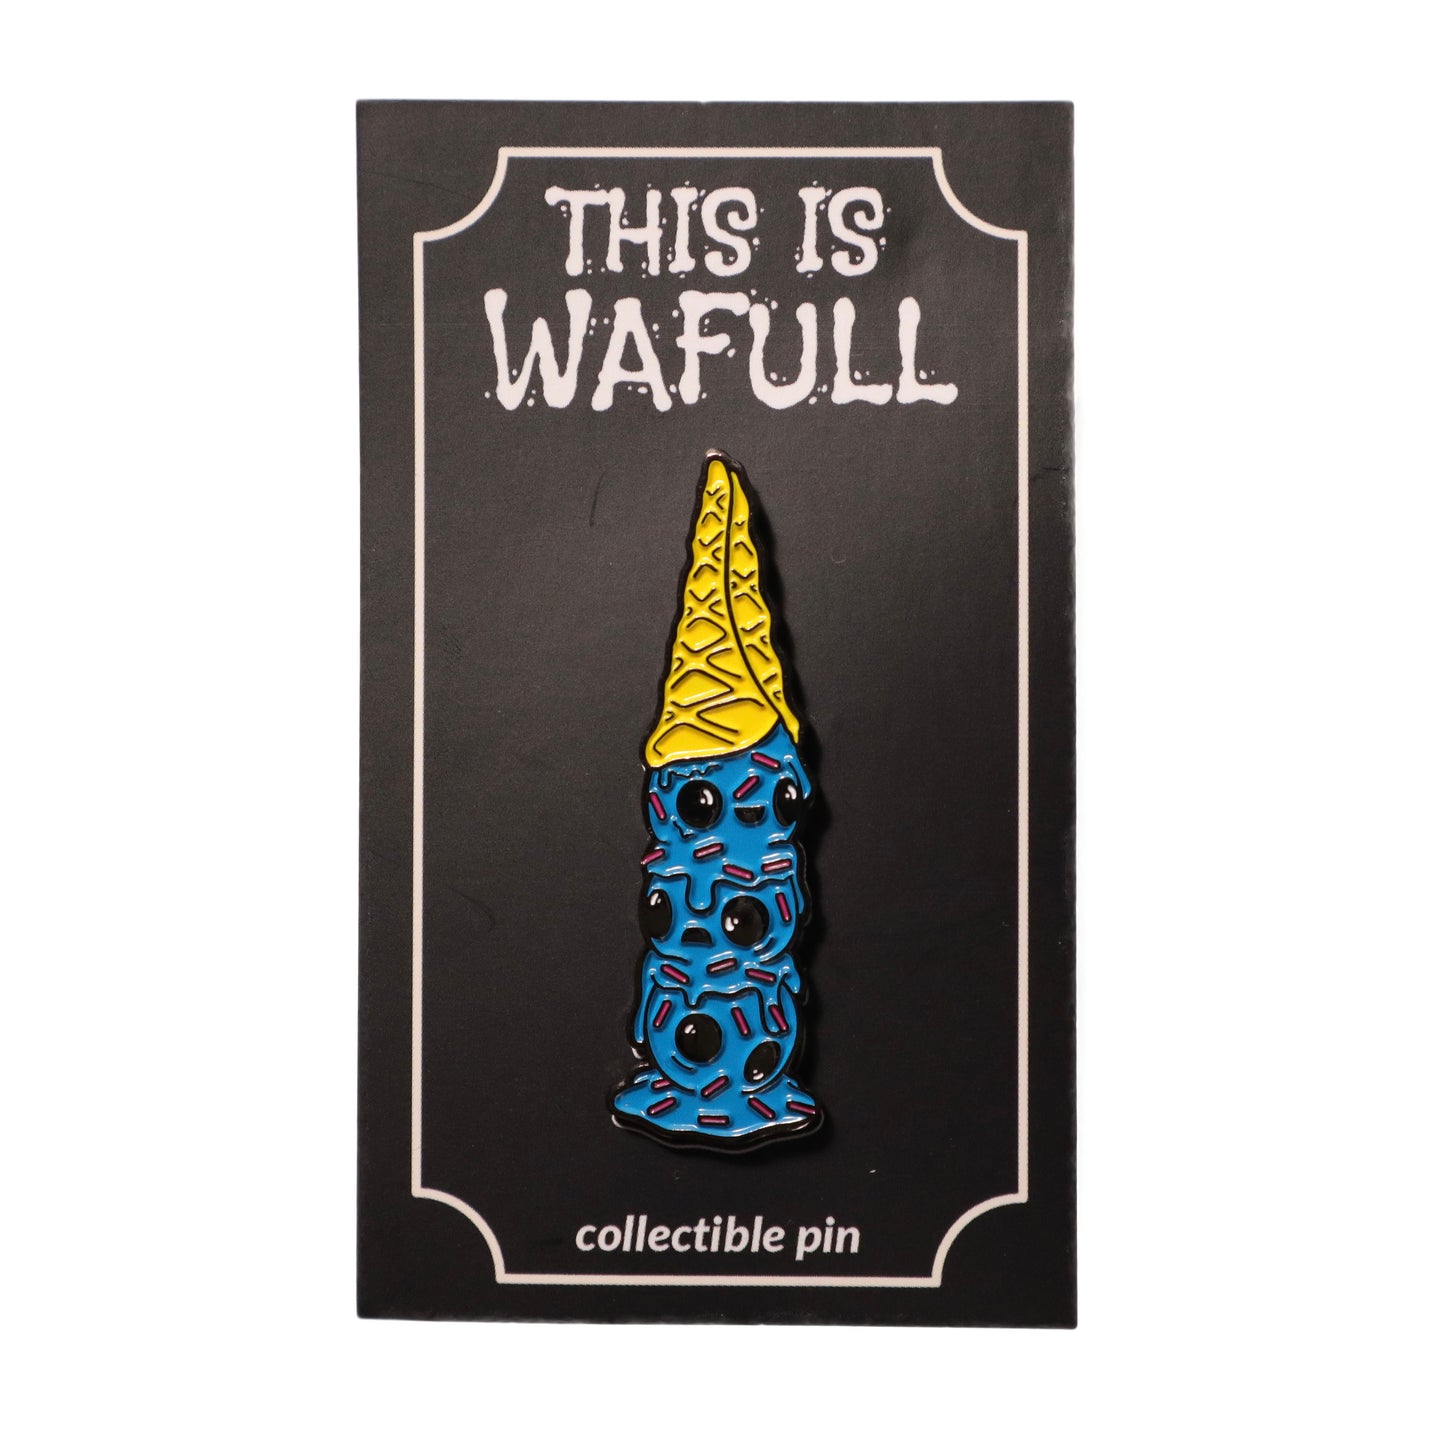 This is Wafull Acidic Edition Enamel Pin